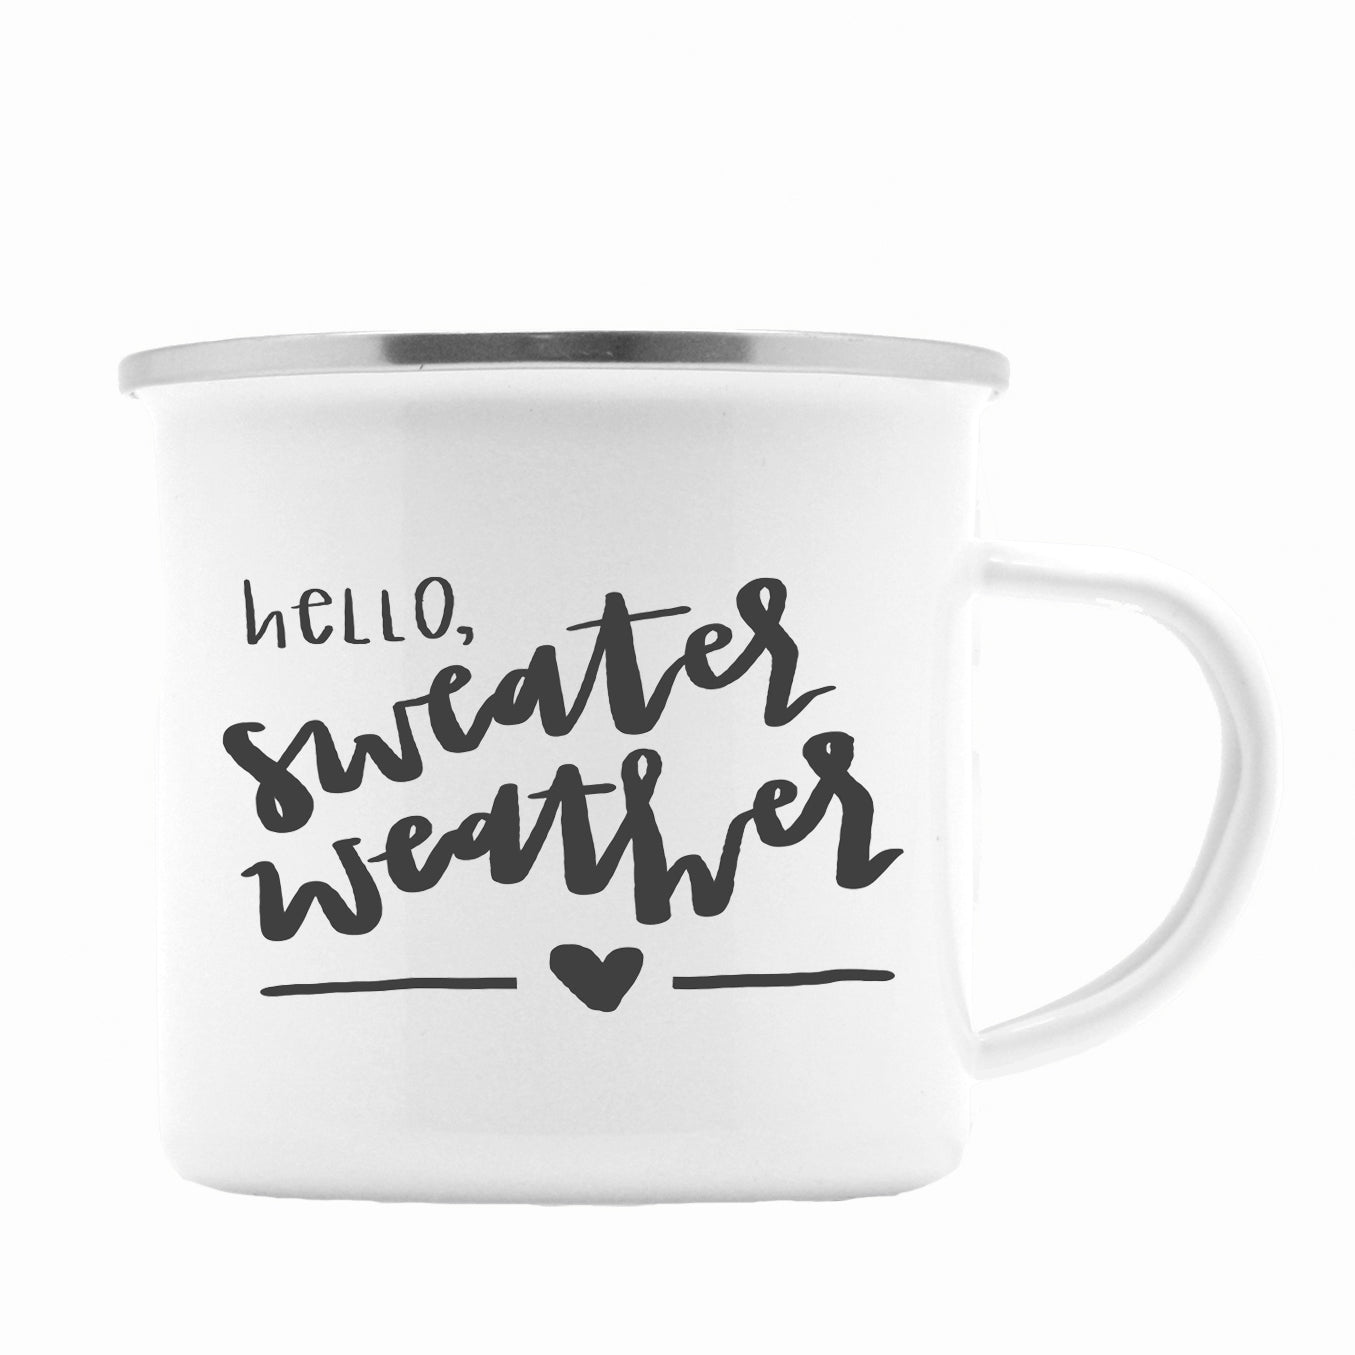 Hello Sweater Weather Camper Coffee Mug